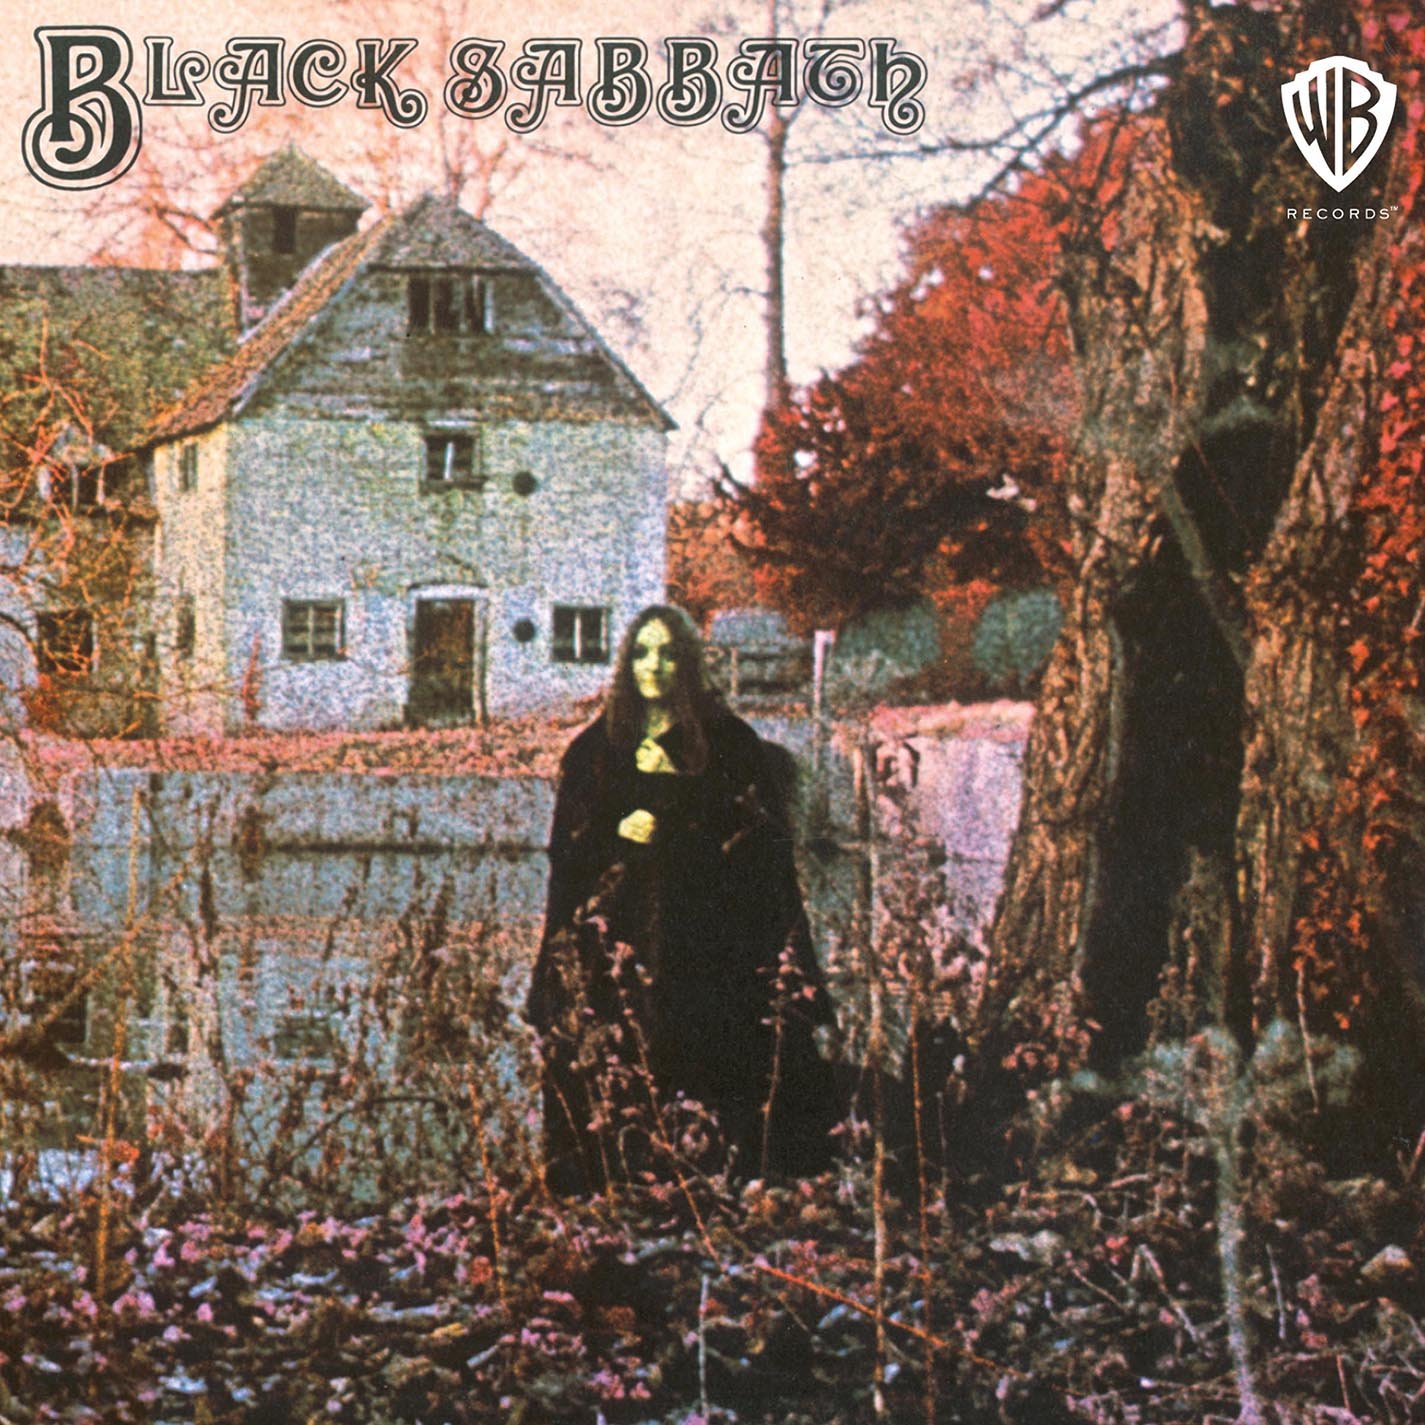 Black Sabbath self-titled album cover